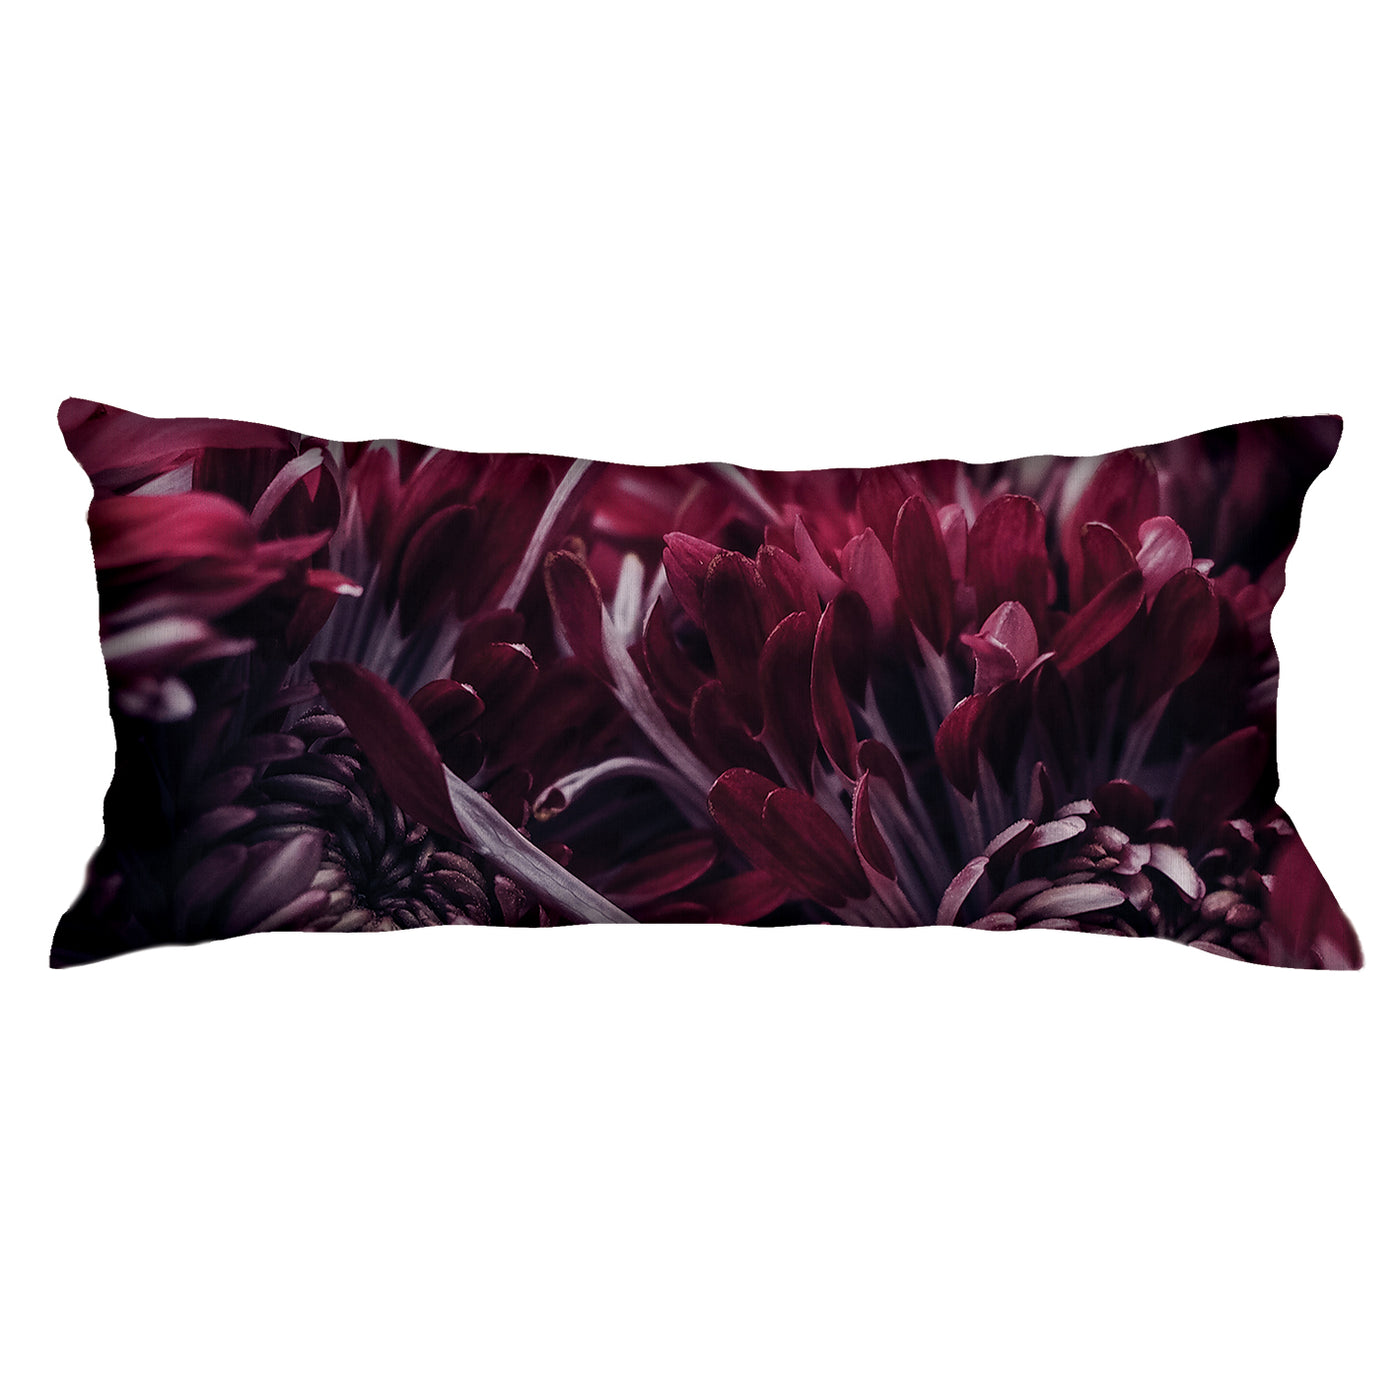 Burgundy Flowers Design on Scatter Cushion